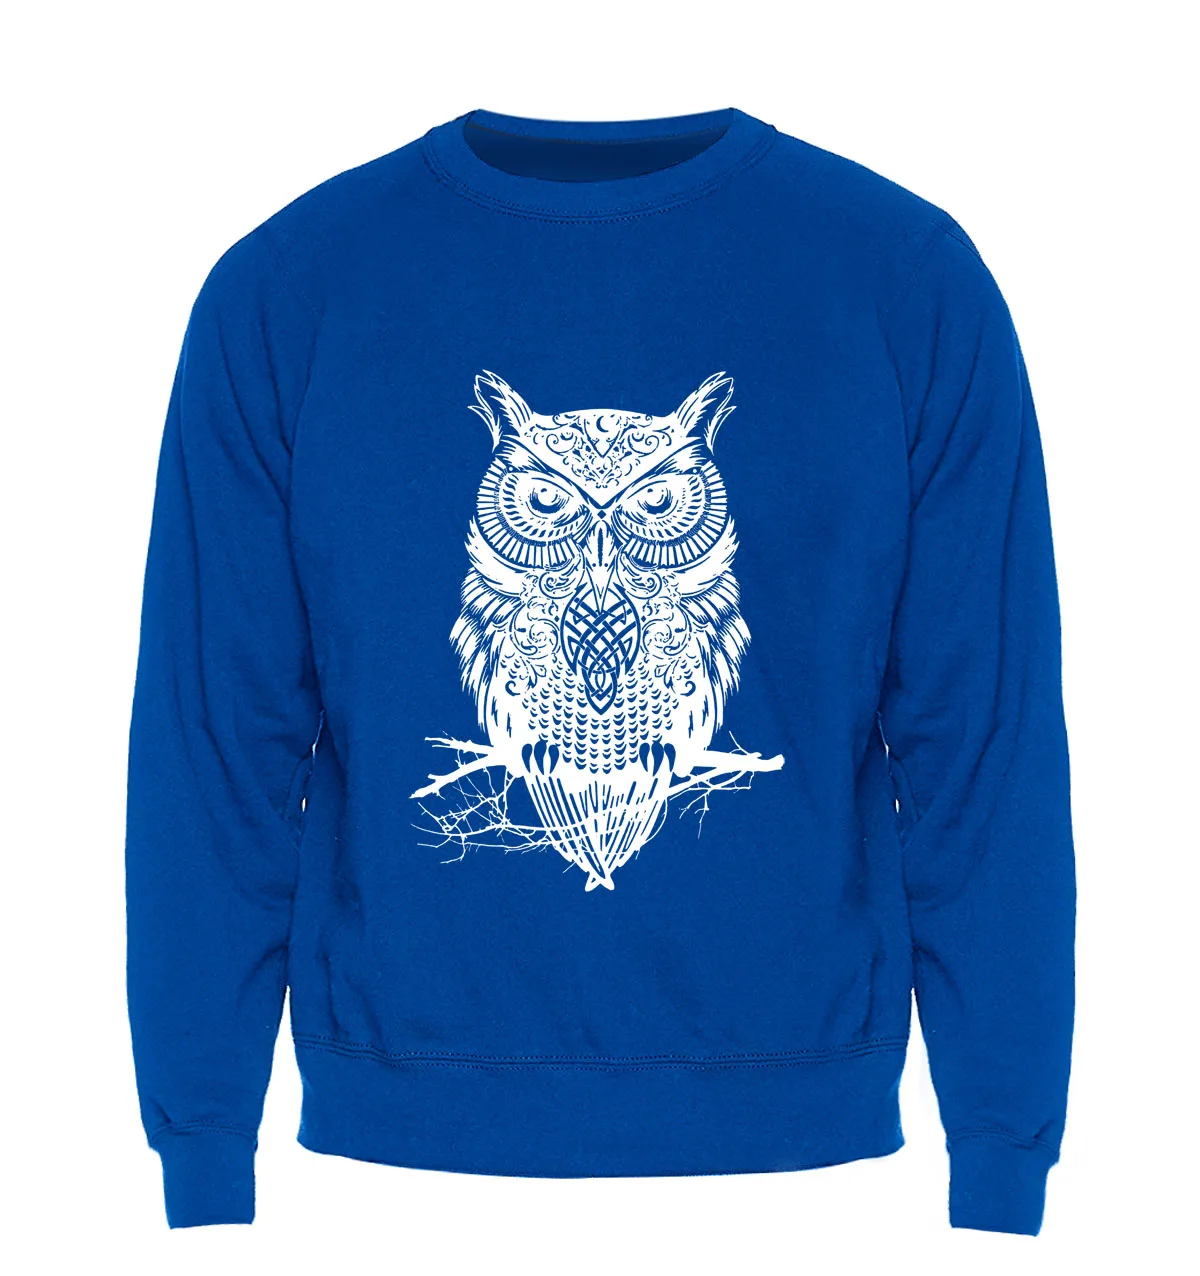 Details about   Wellcoda Owl Dream Beast Animal Mens Sweatshirt Bird Casual Pullover Jumper 